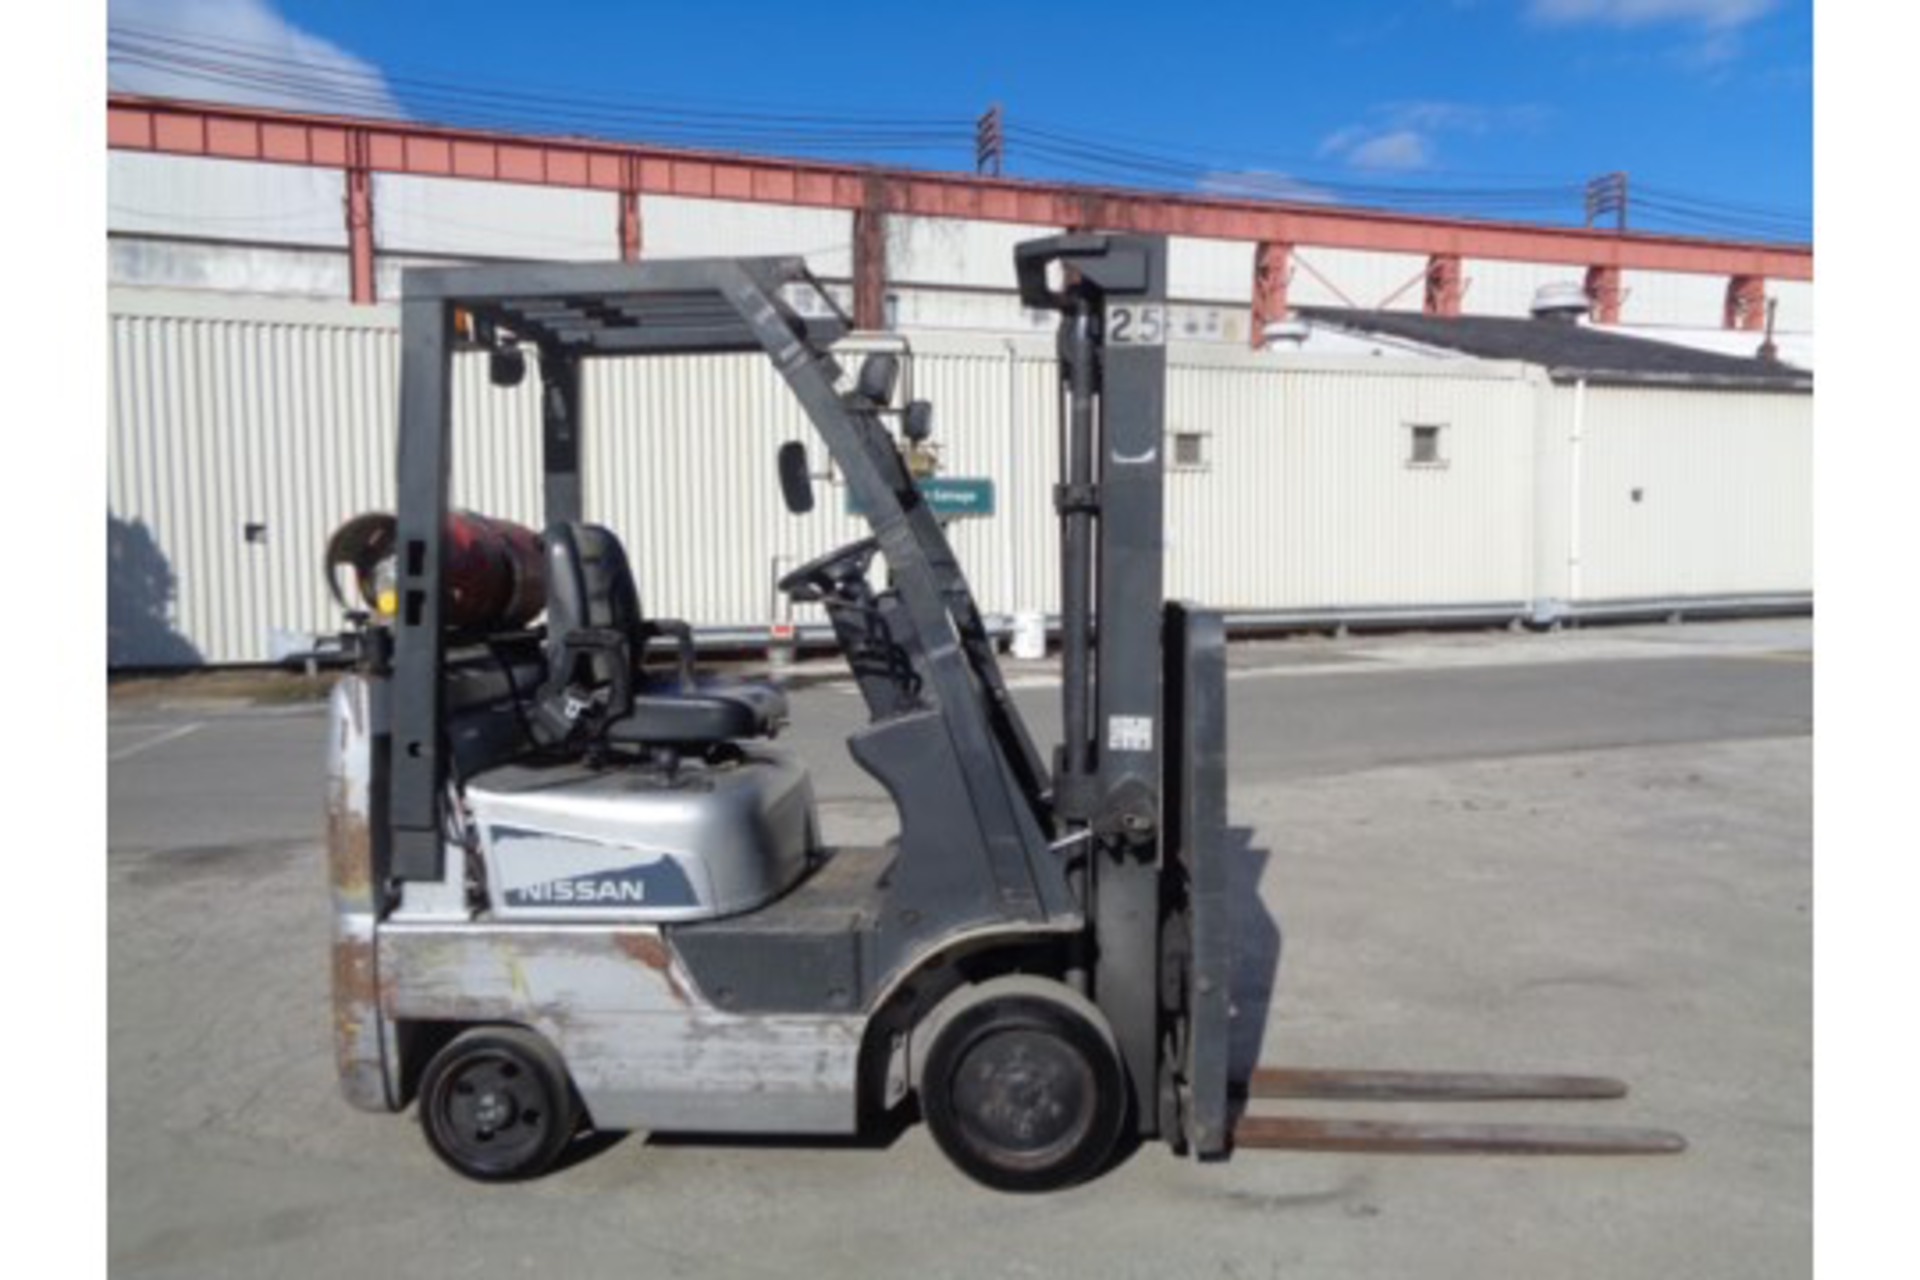 Nissan MCPL01A18LV 3500lb Forklift